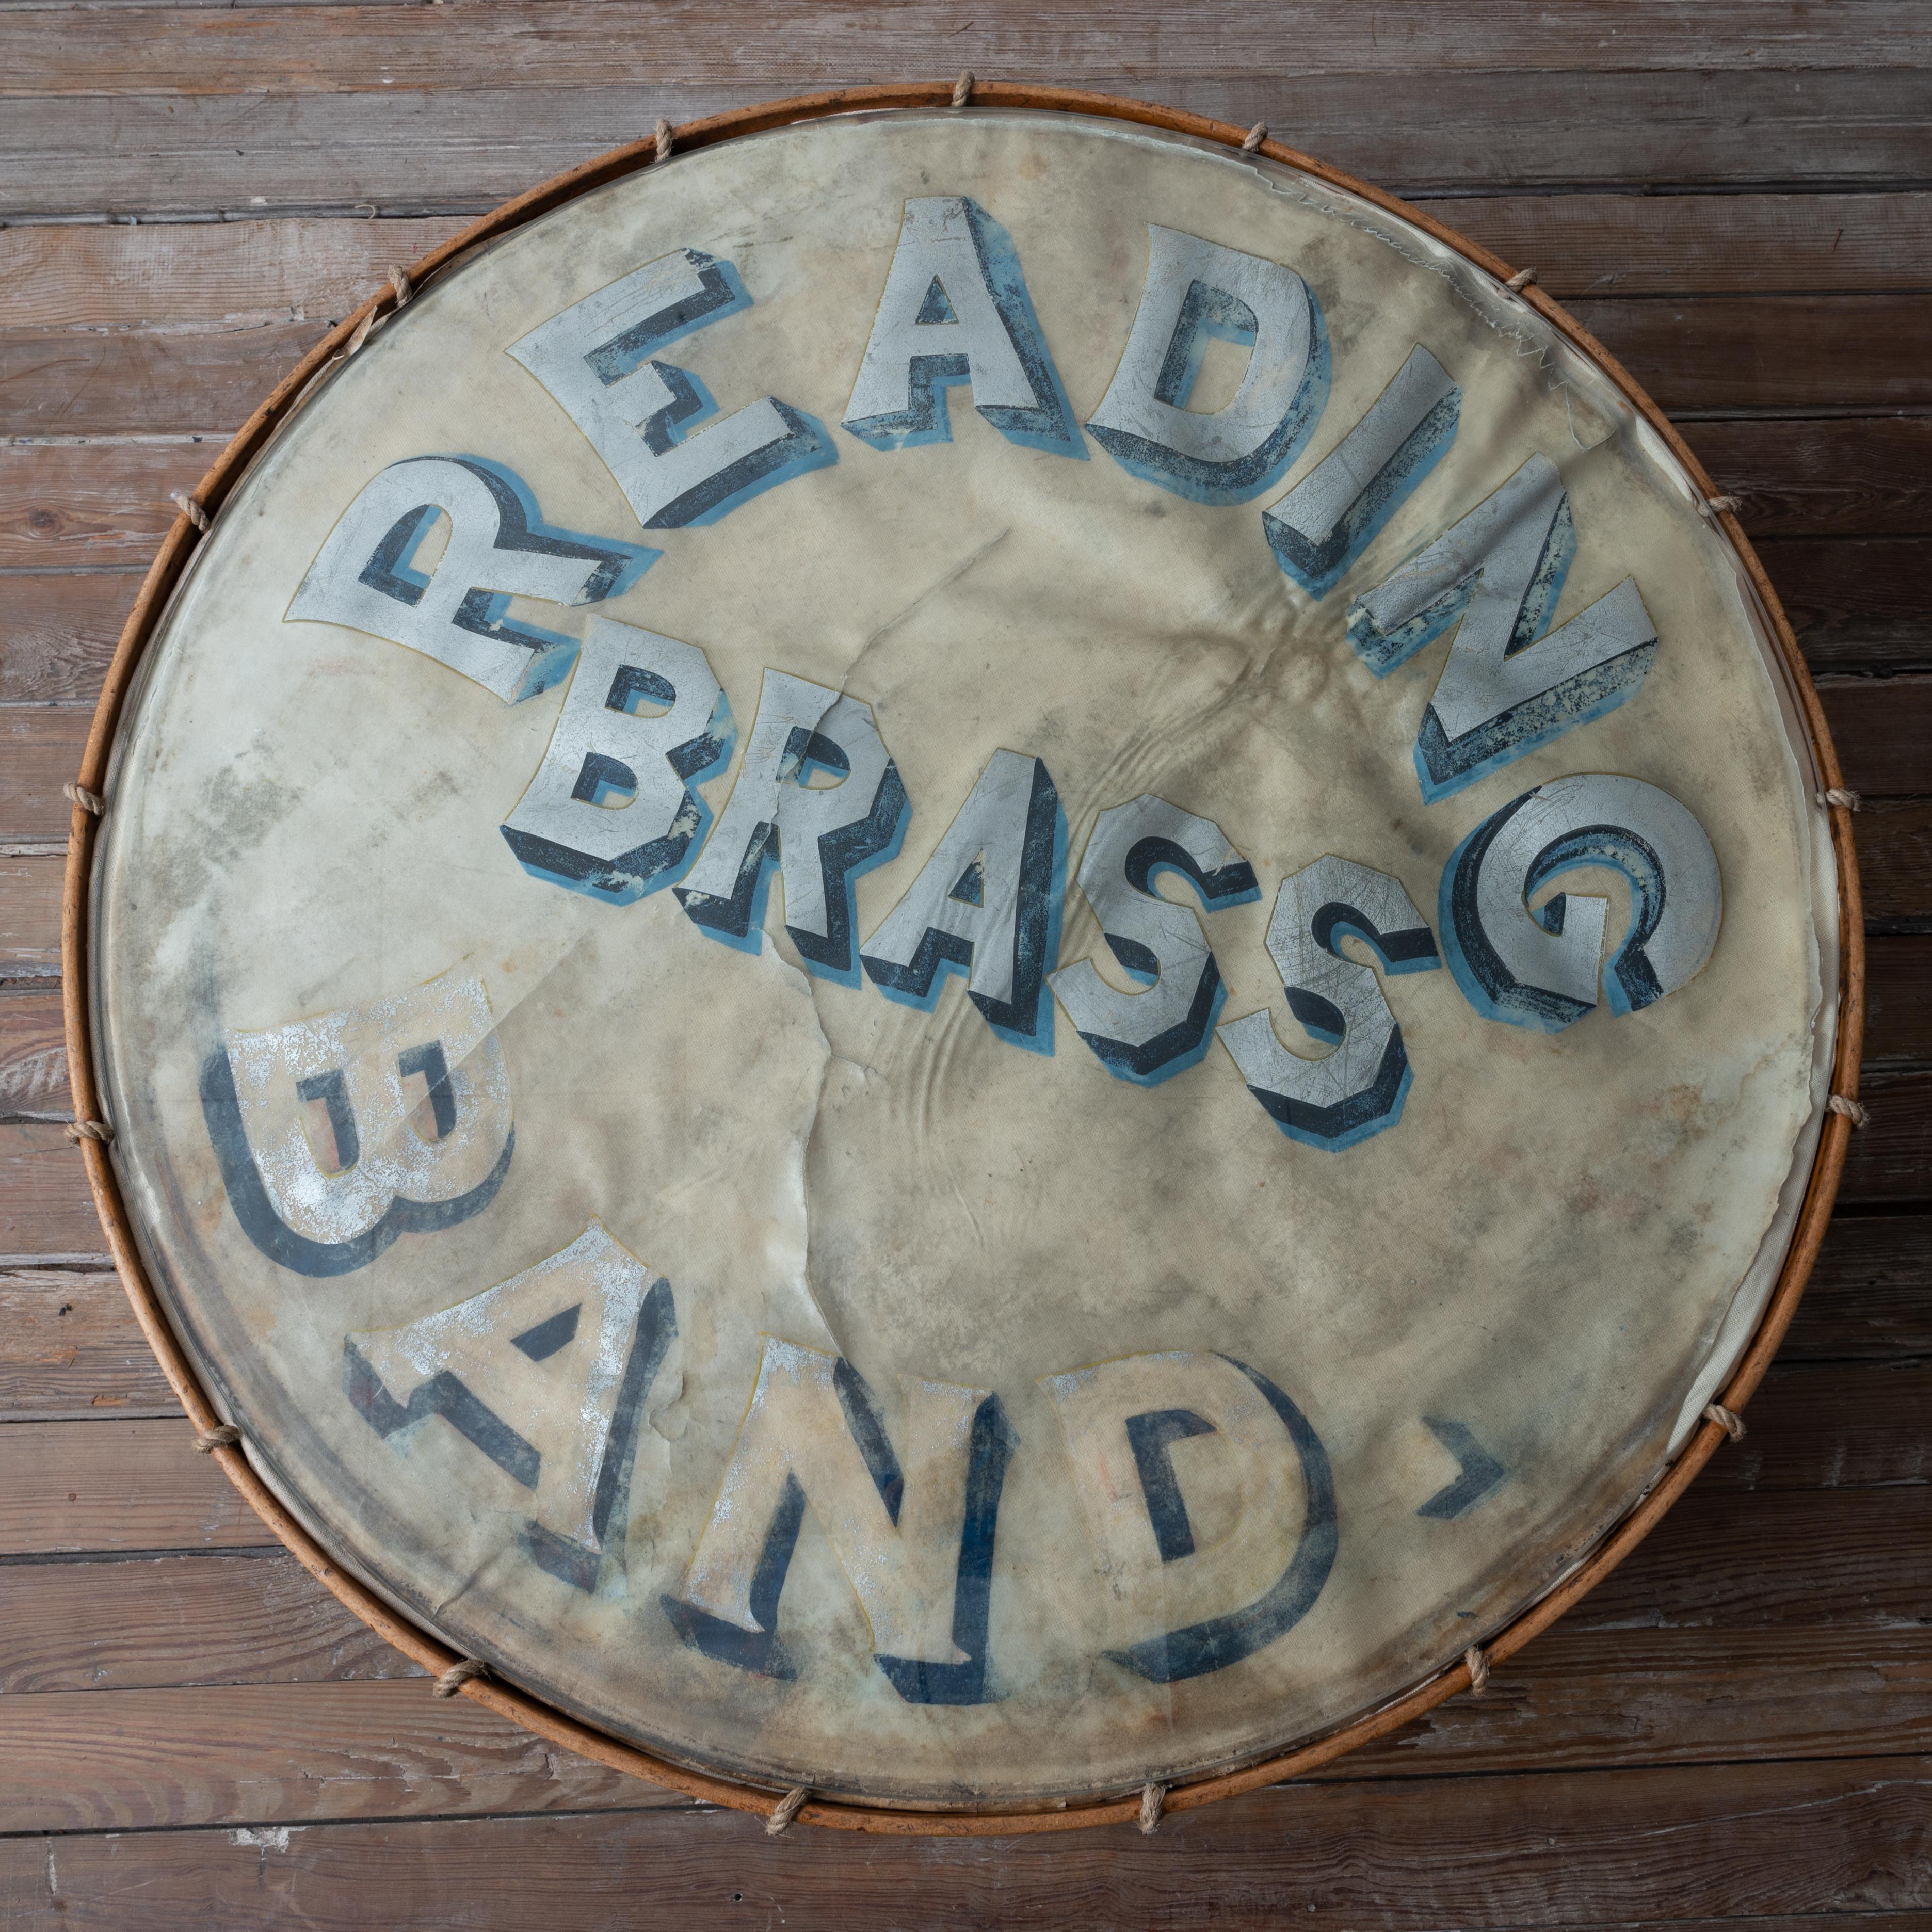 J.B. Treat “Reading Brass Band